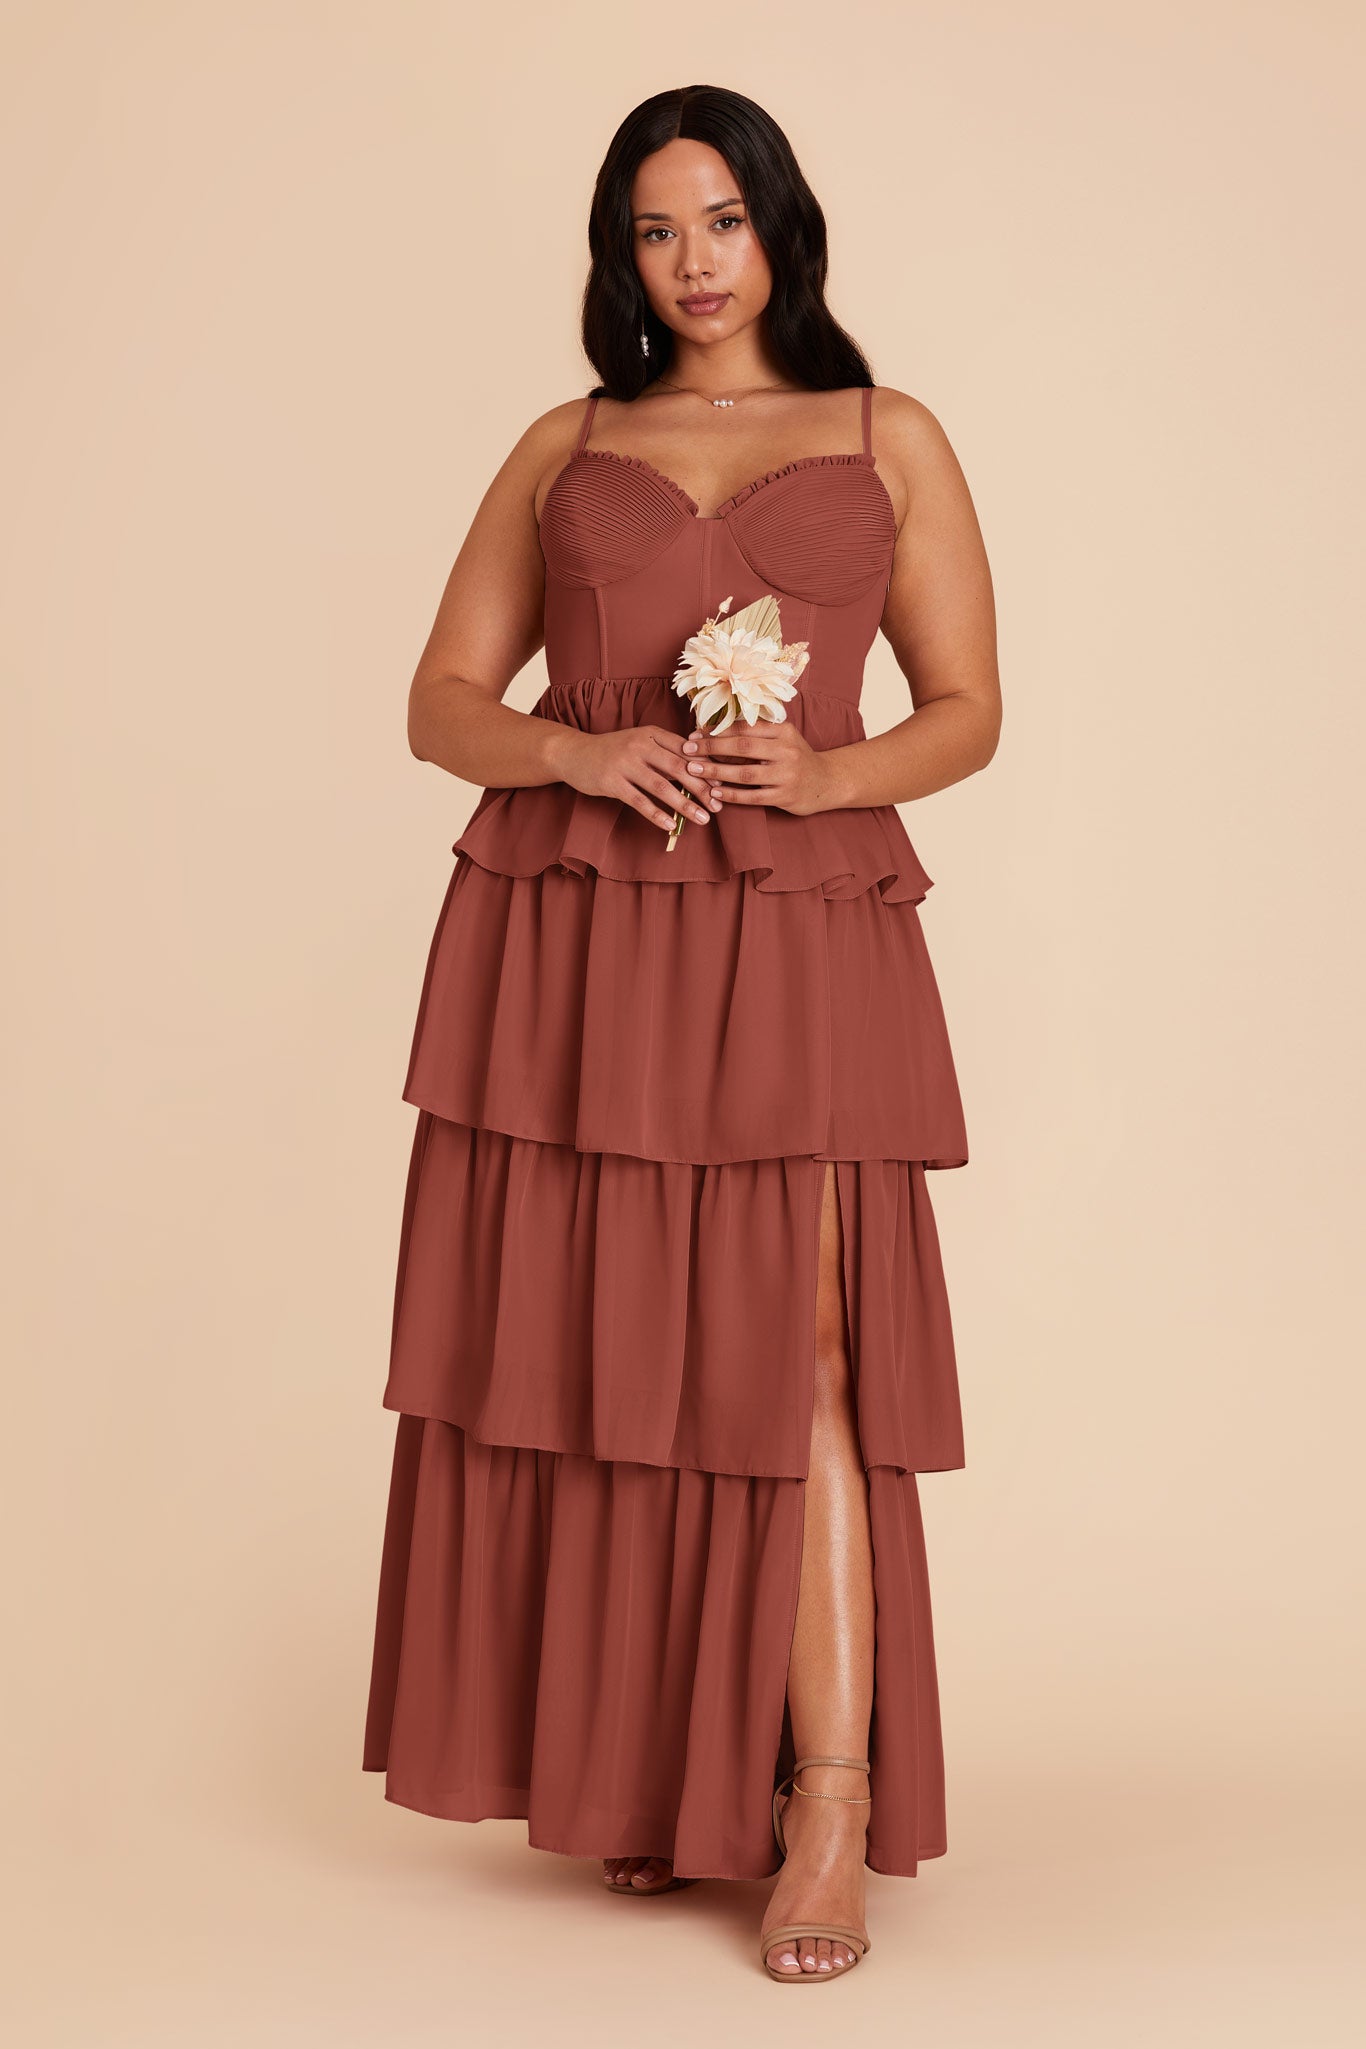 Desert Rose Lola Chiffon Dress by Birdy Grey